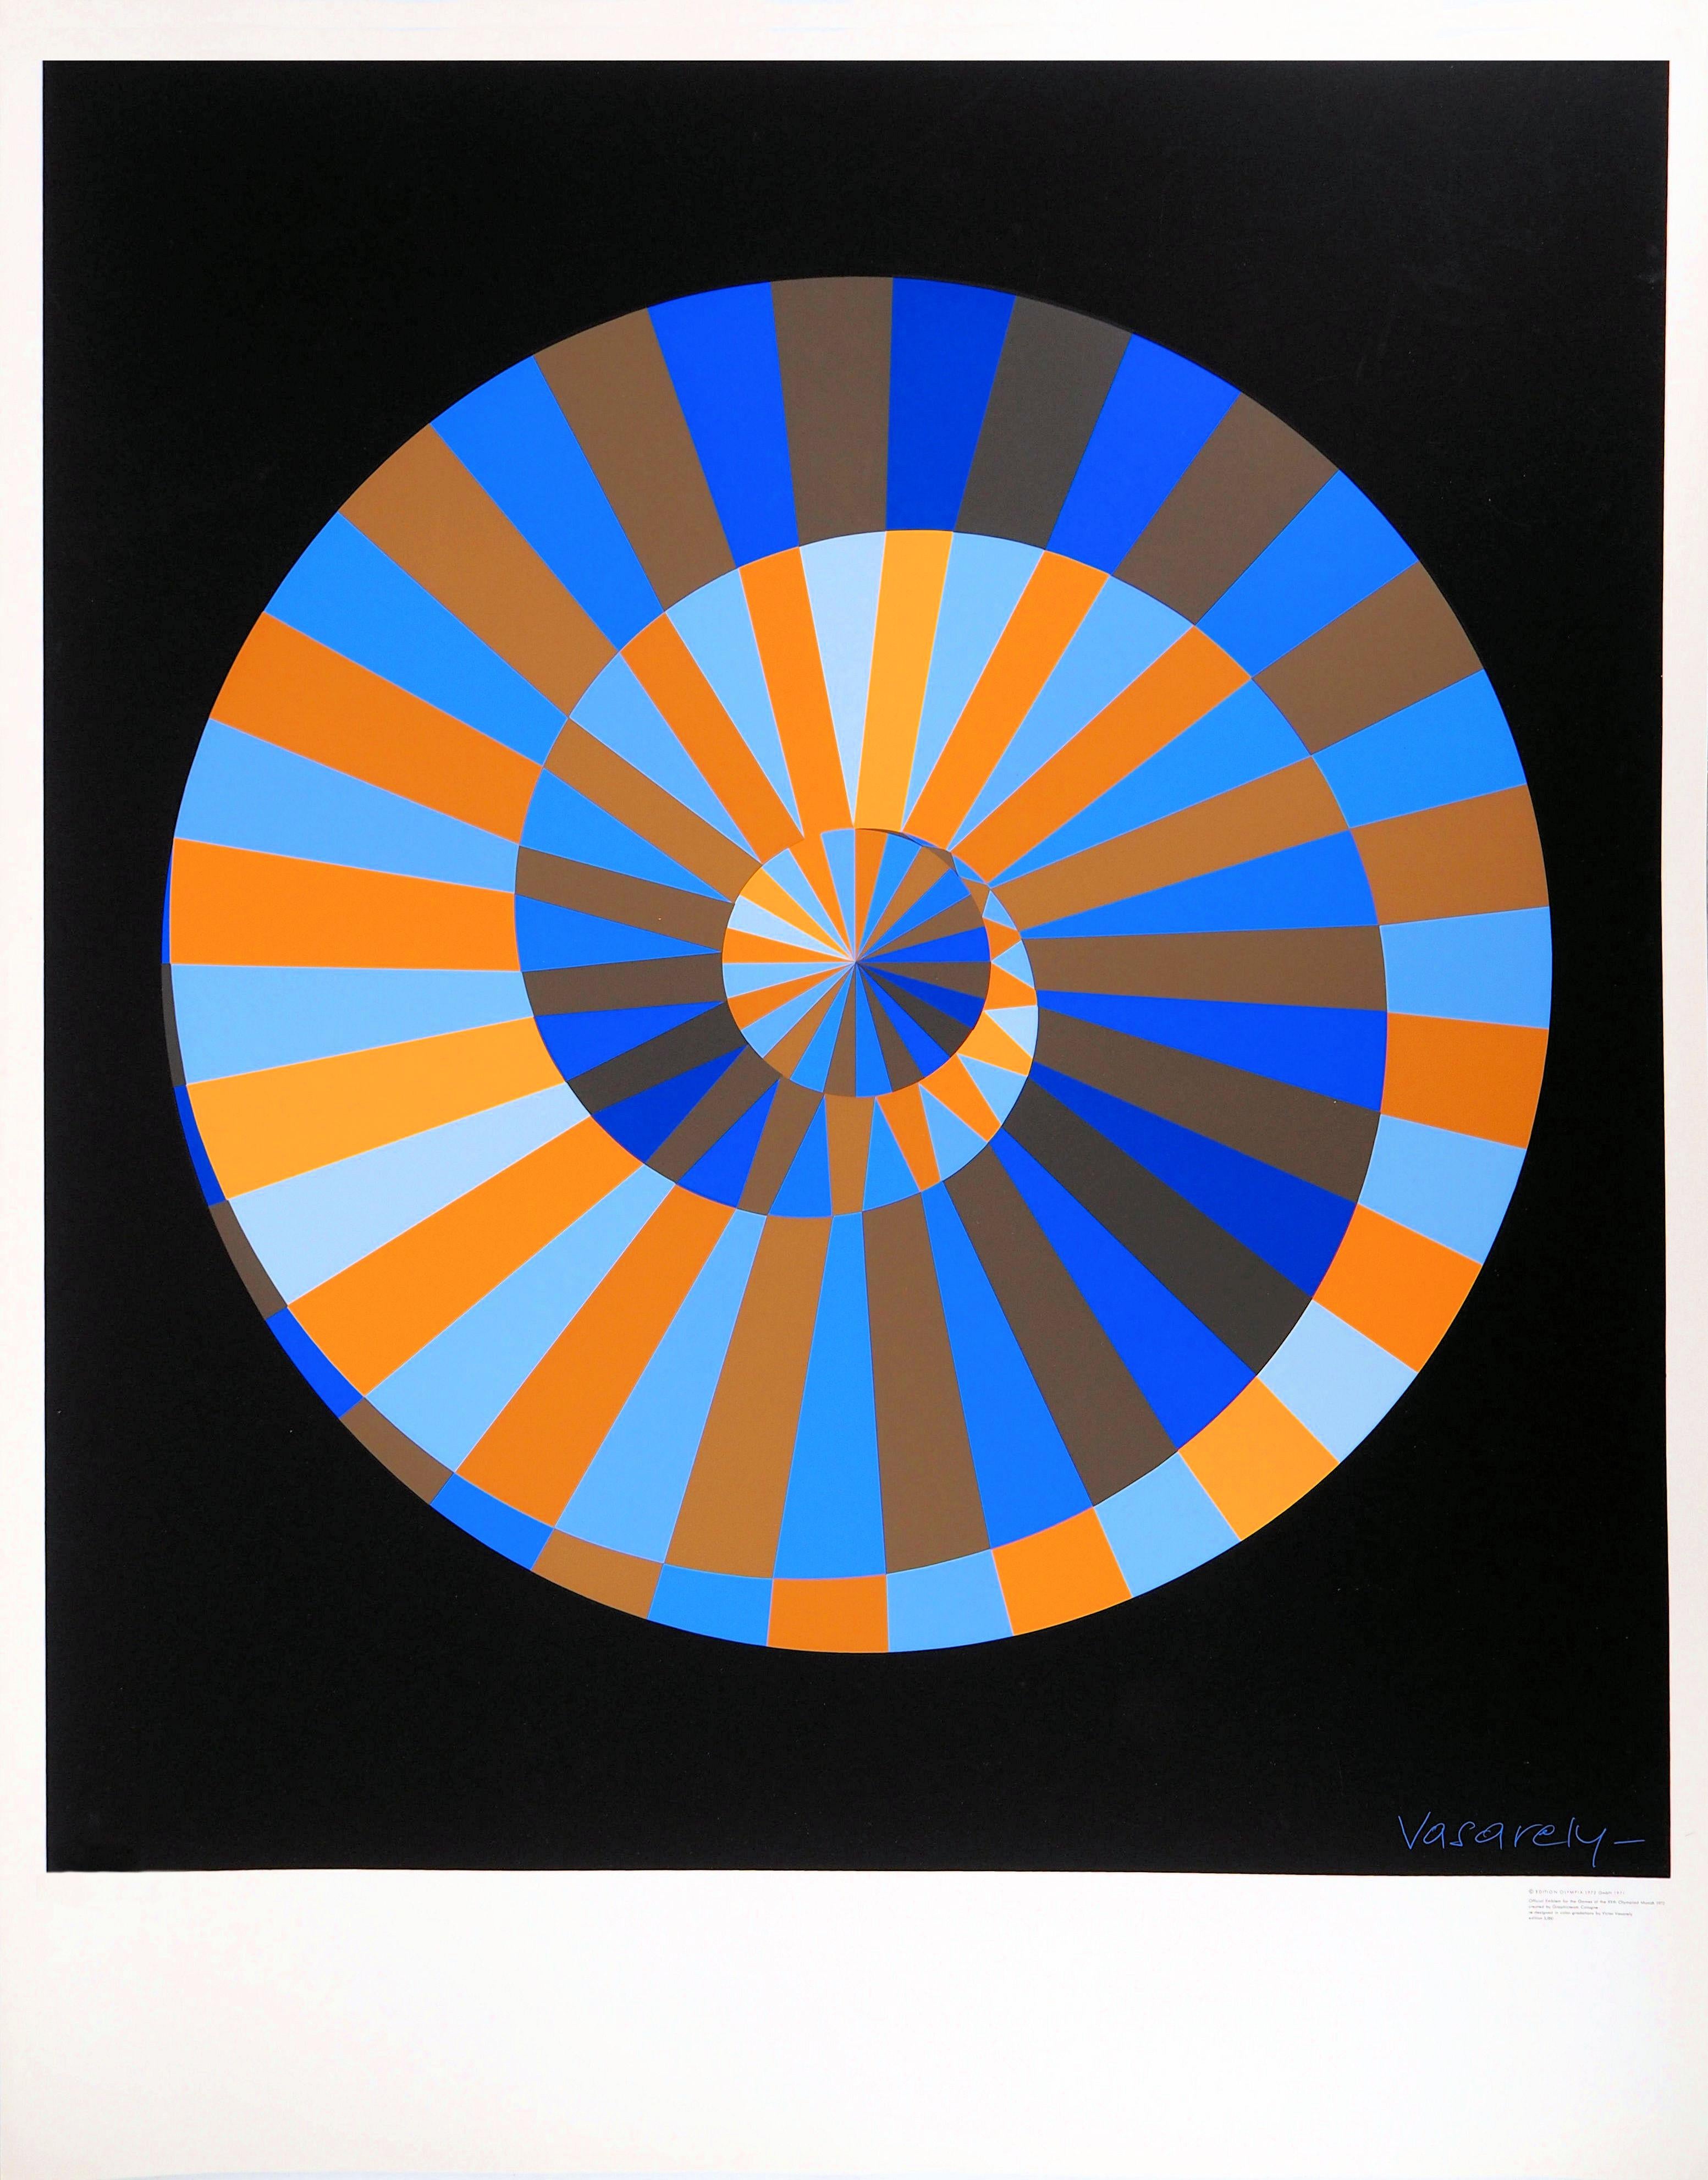 Victor Vasarely Abstract Print - Olympia : Sky and Sun (Op Art Spiral) - Original Screen Print, 1971